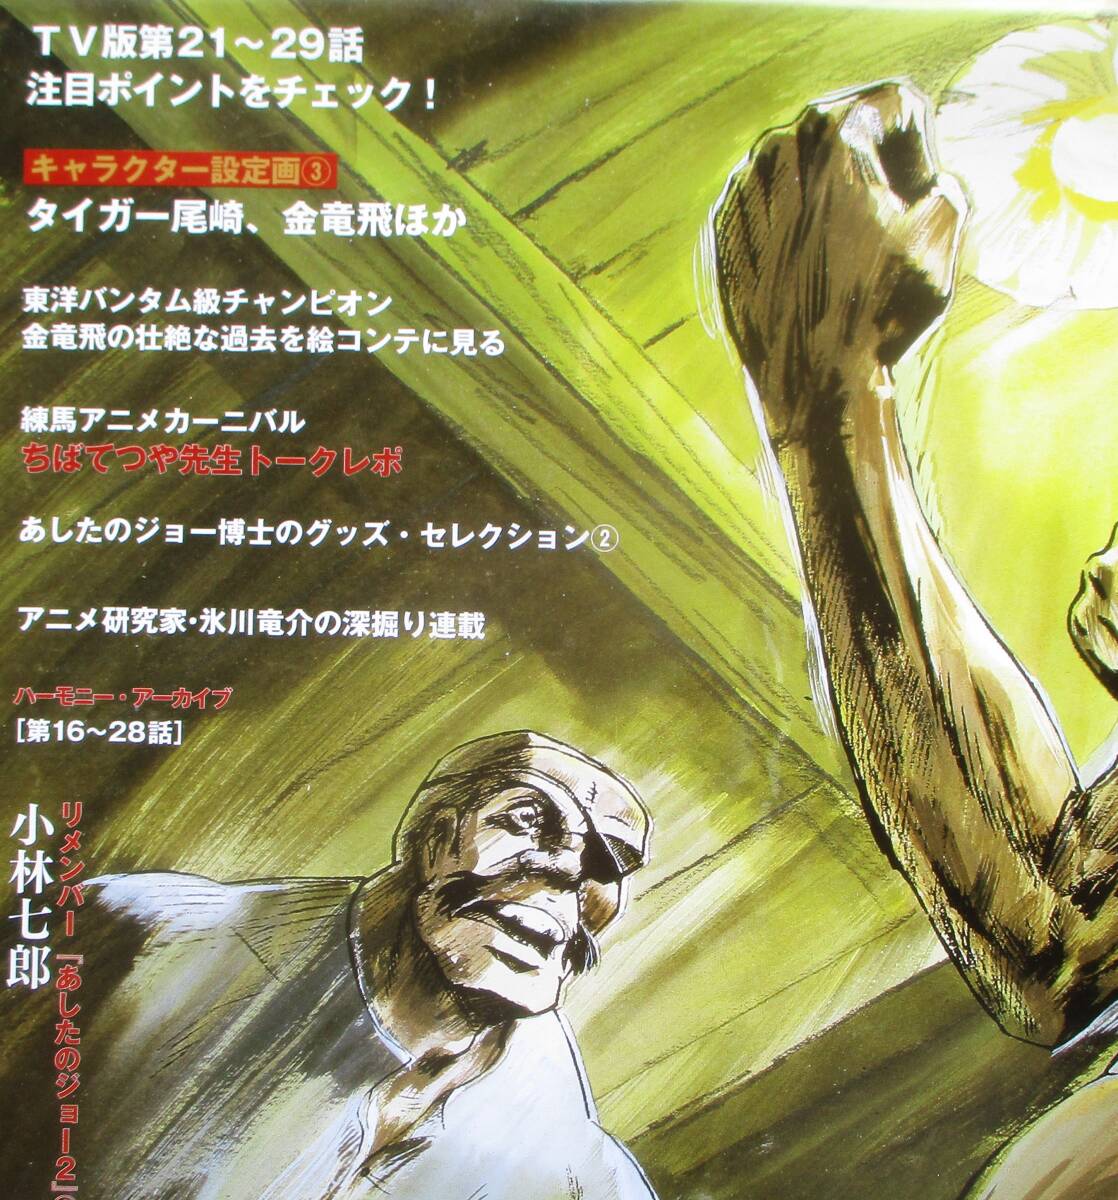  Ashita no Joe 2 COMPLETE DVD BOOK буклет 4 шт. (1,2,3,5)4. отсутствует ..... блеск 